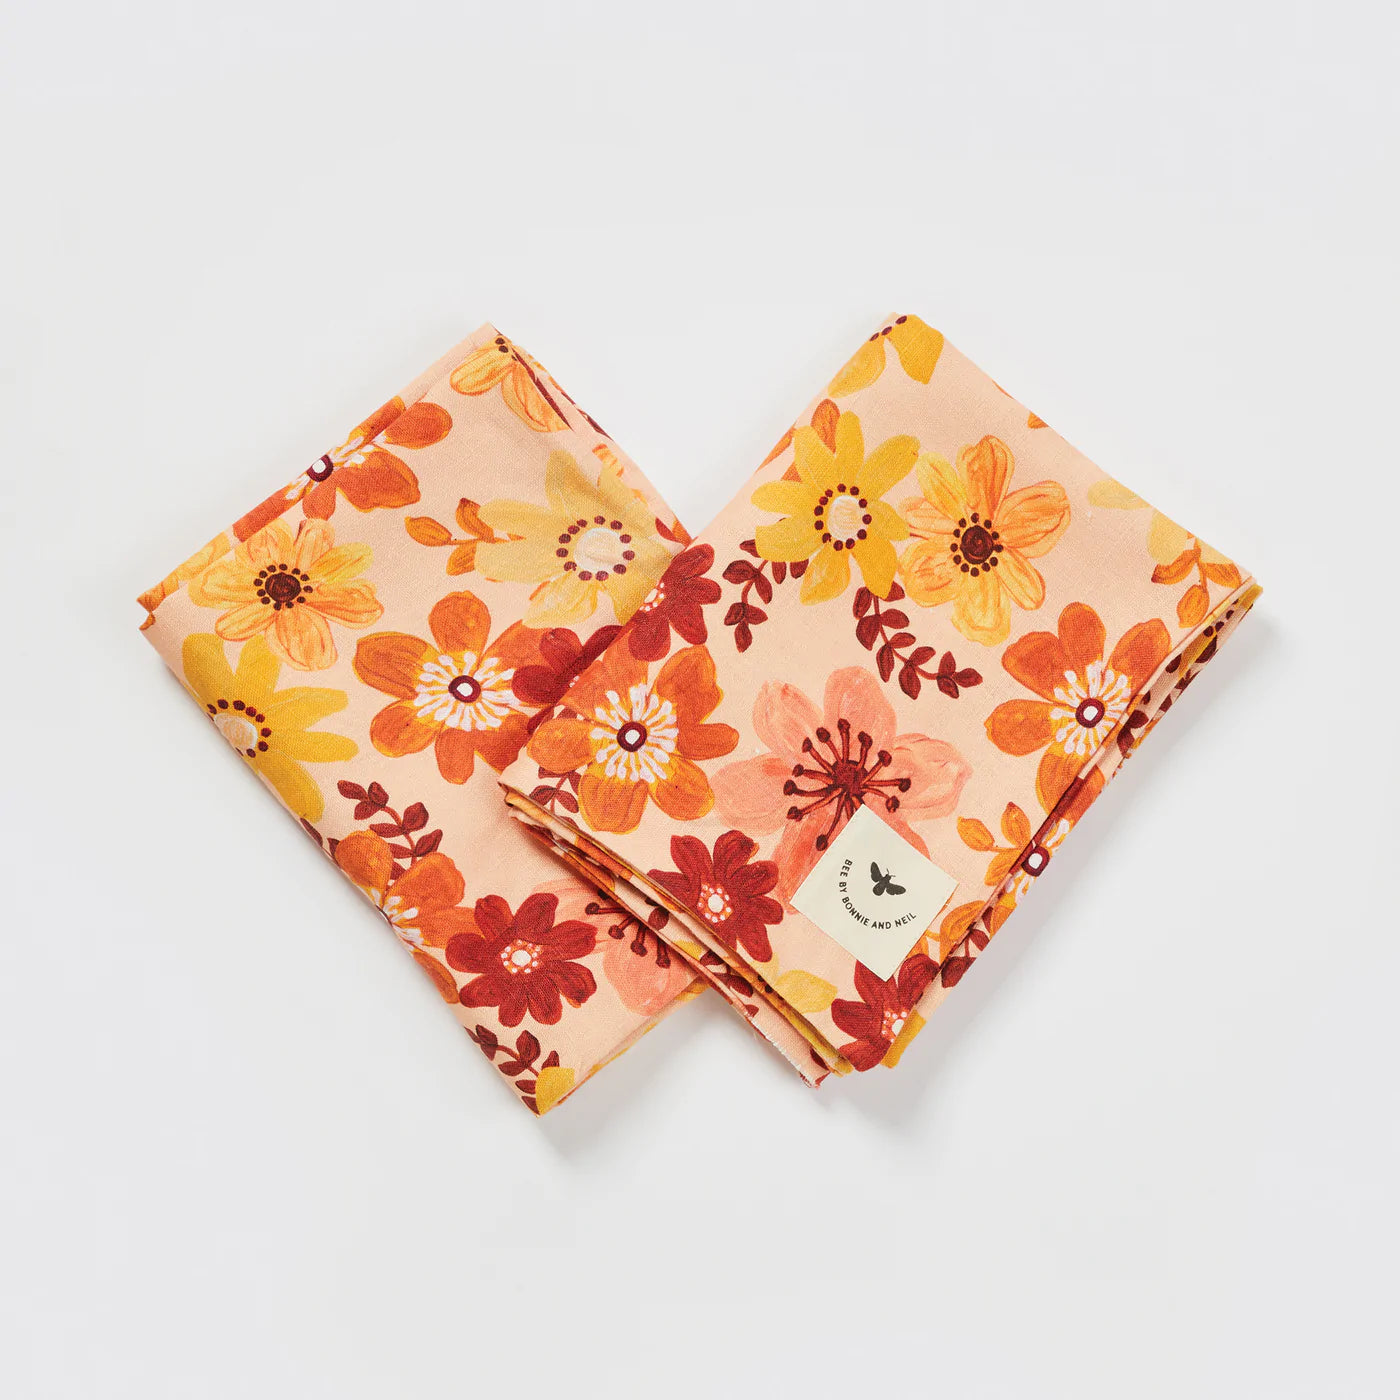 Bonnie and Neil Matilda Blossom pillowcases linen Australian made